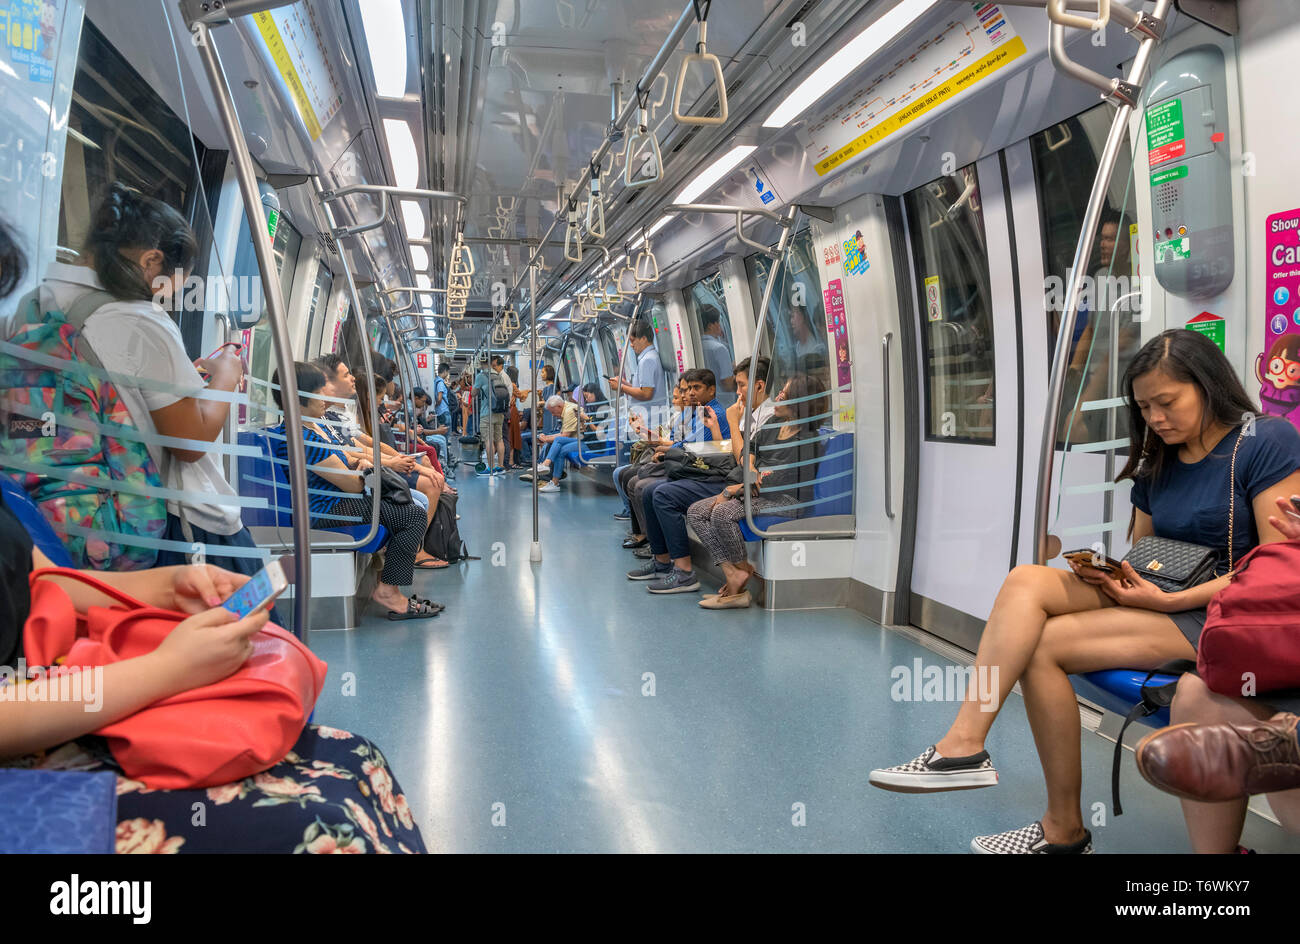 Subway carriage on the Singapore MRT Stock Photo